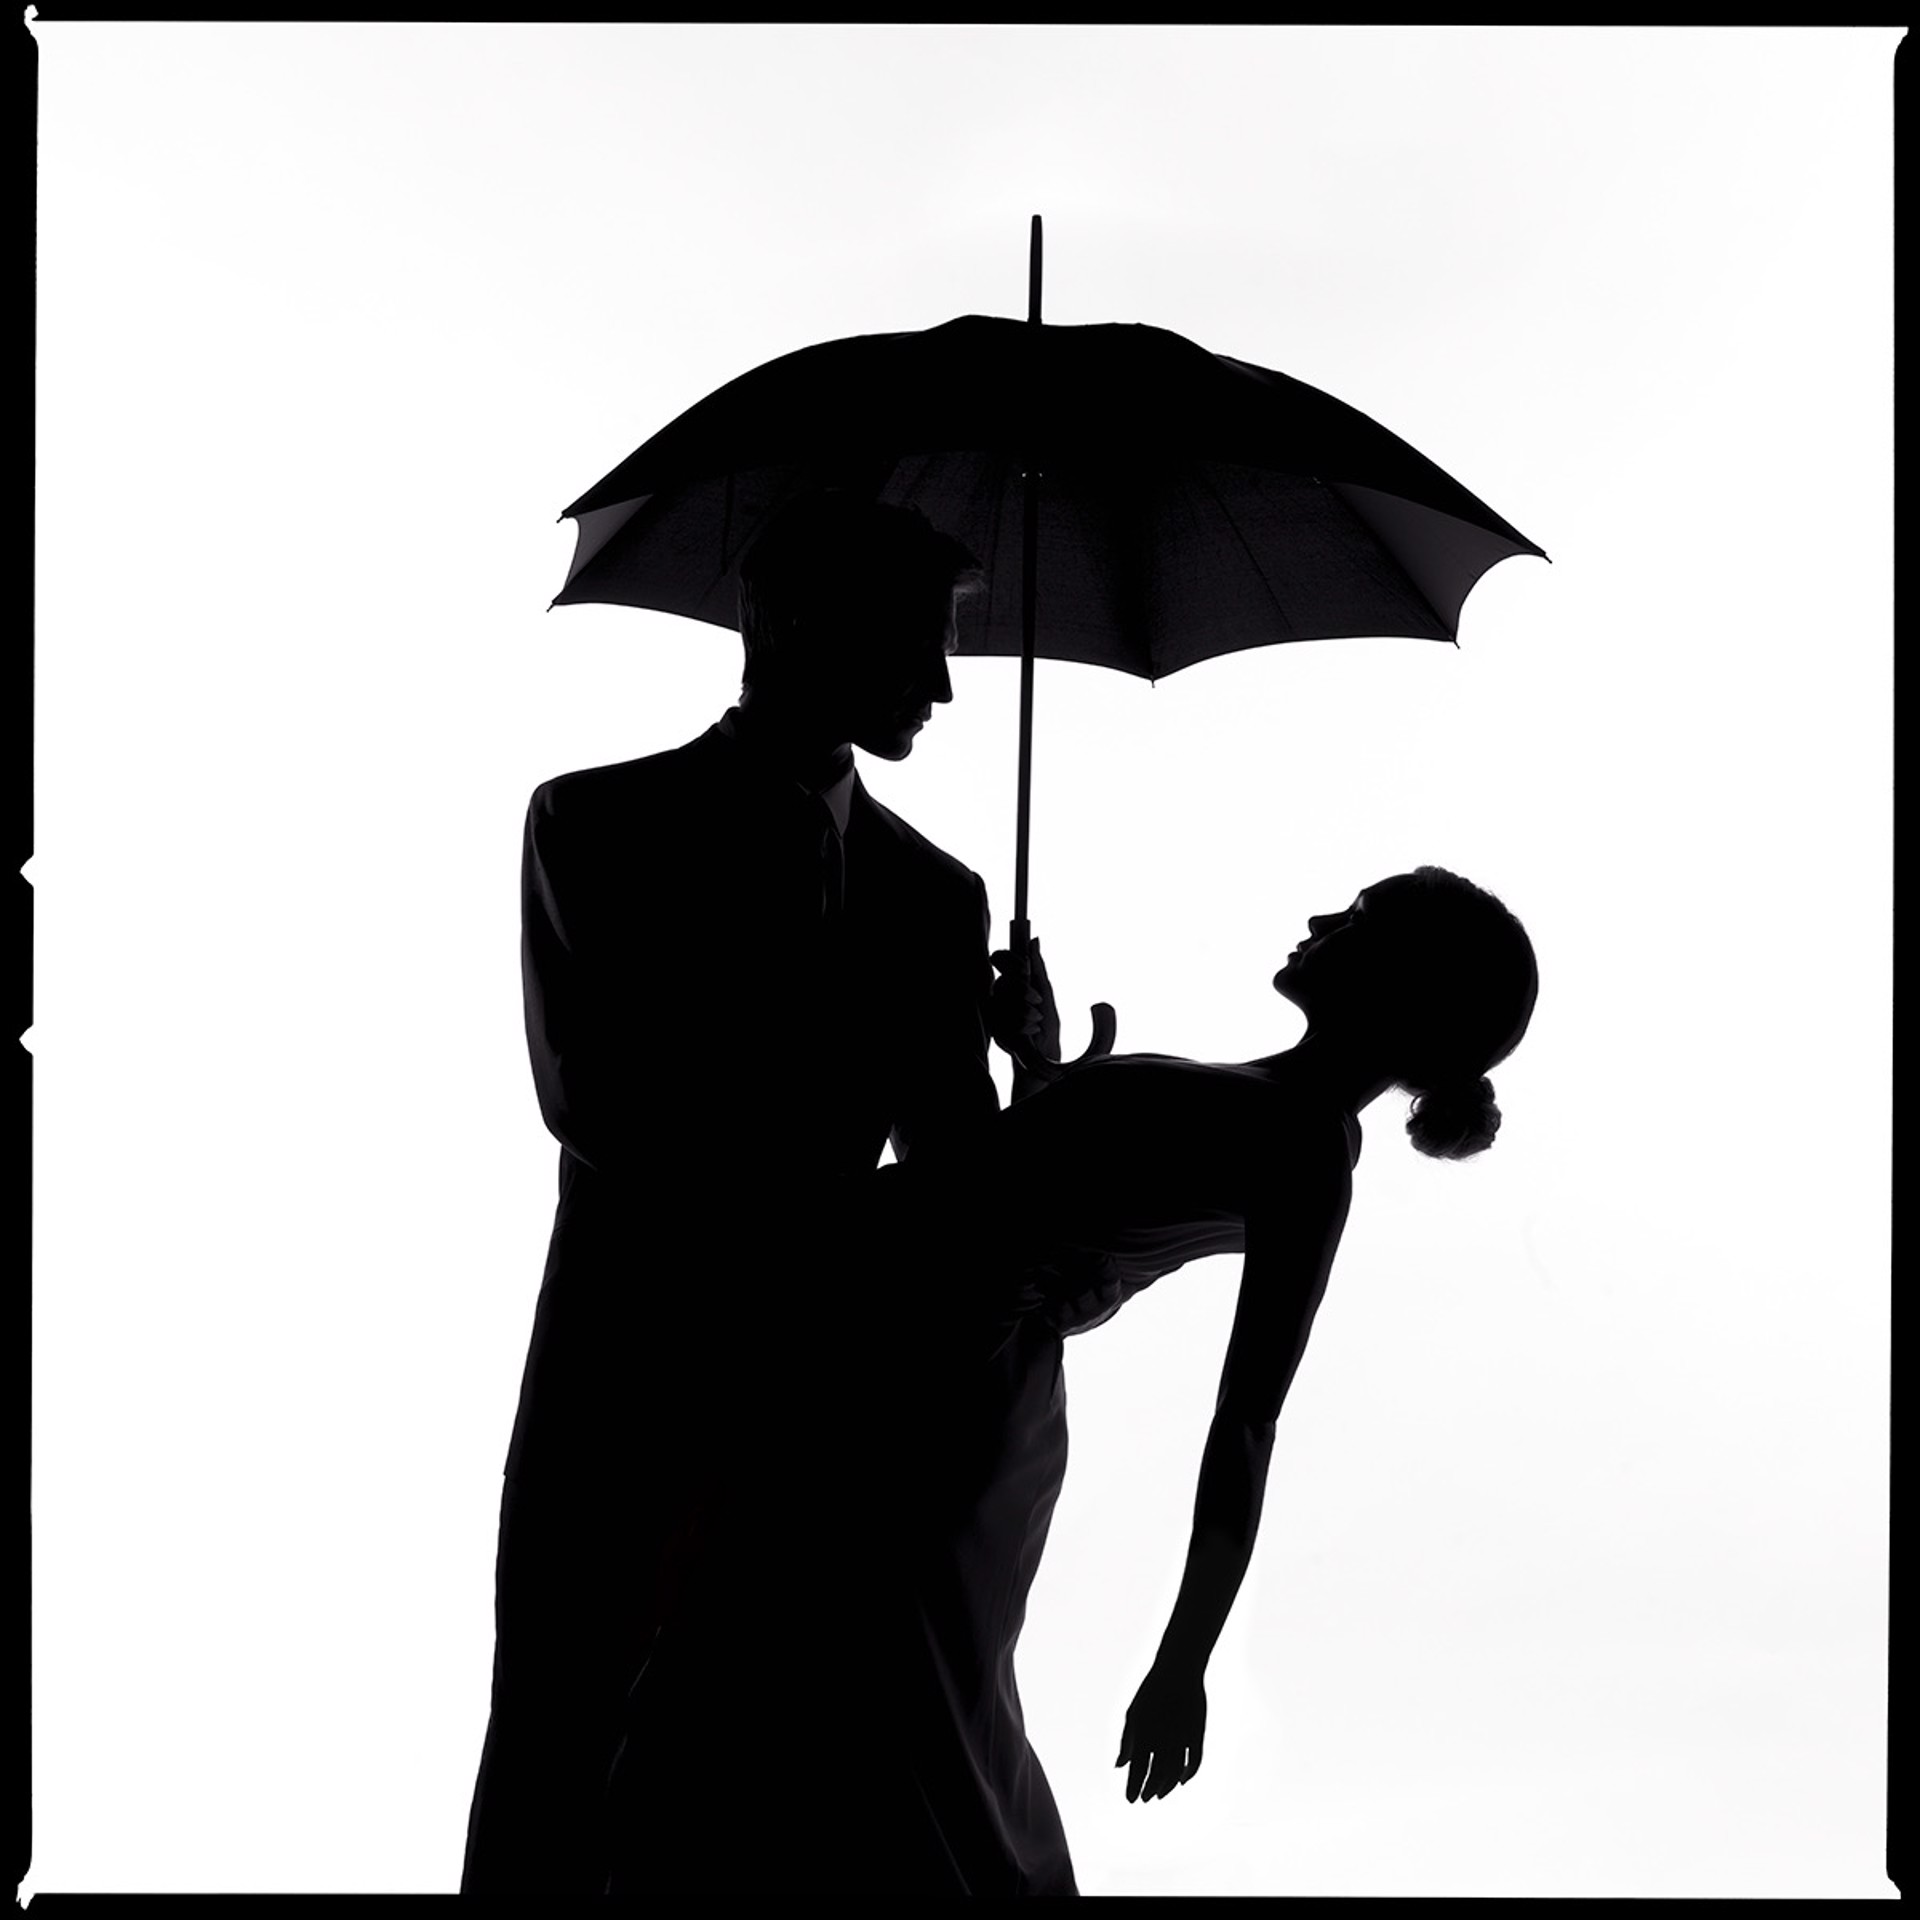 Umbrella Silhouette by Tyler Shields